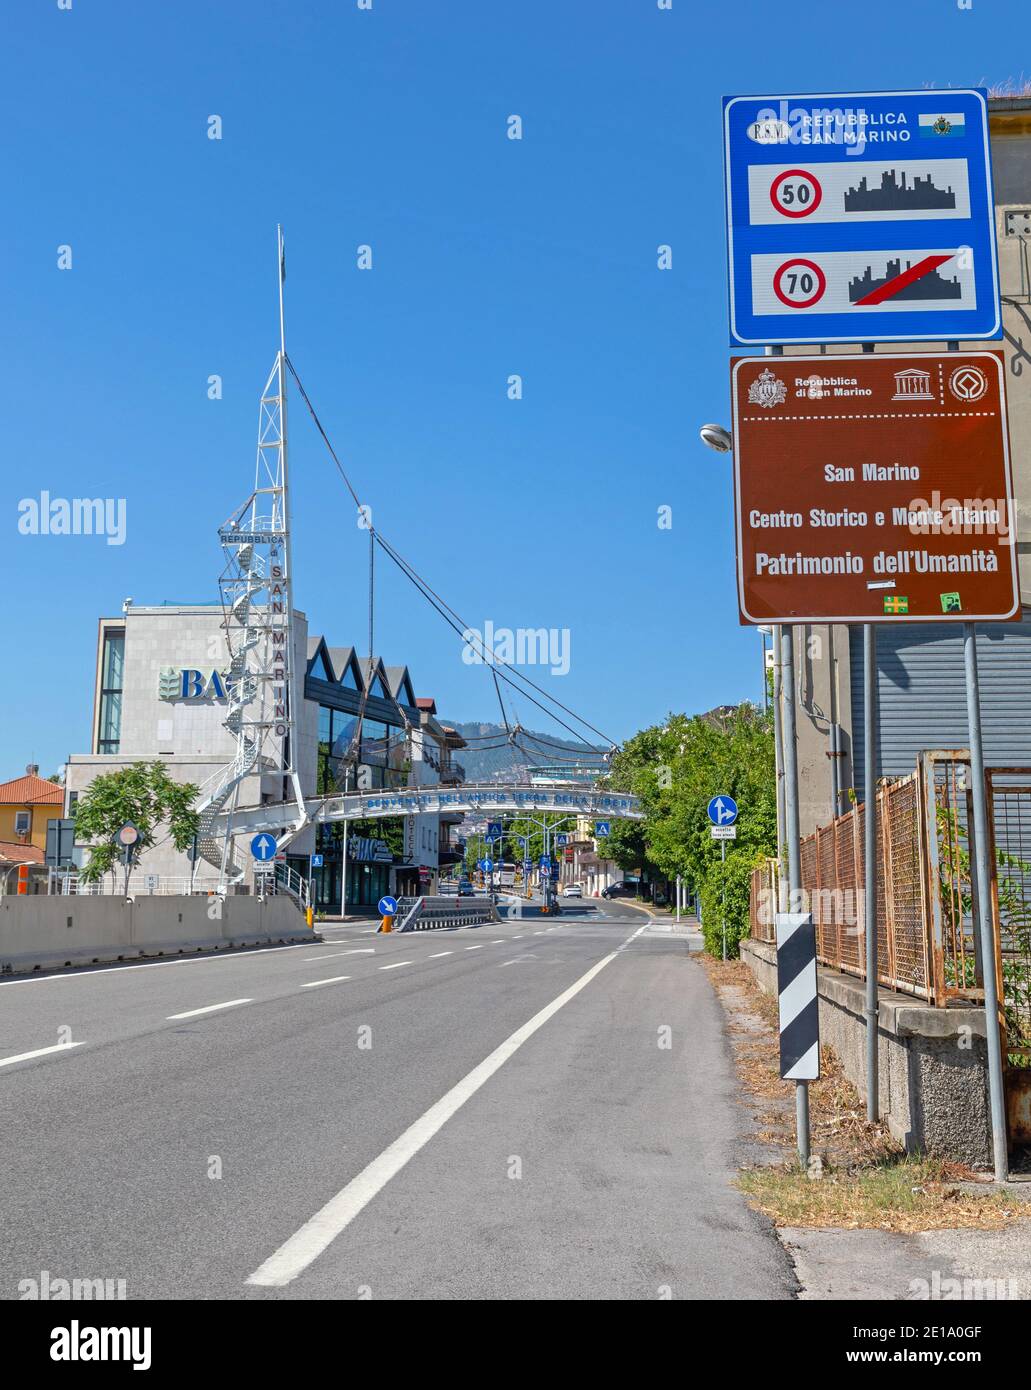 Dogana, San Marino - June 16, 2019: Spire Sign and Pedestrian Bridge at Entrance in Republic of San Marino. Stock Photo